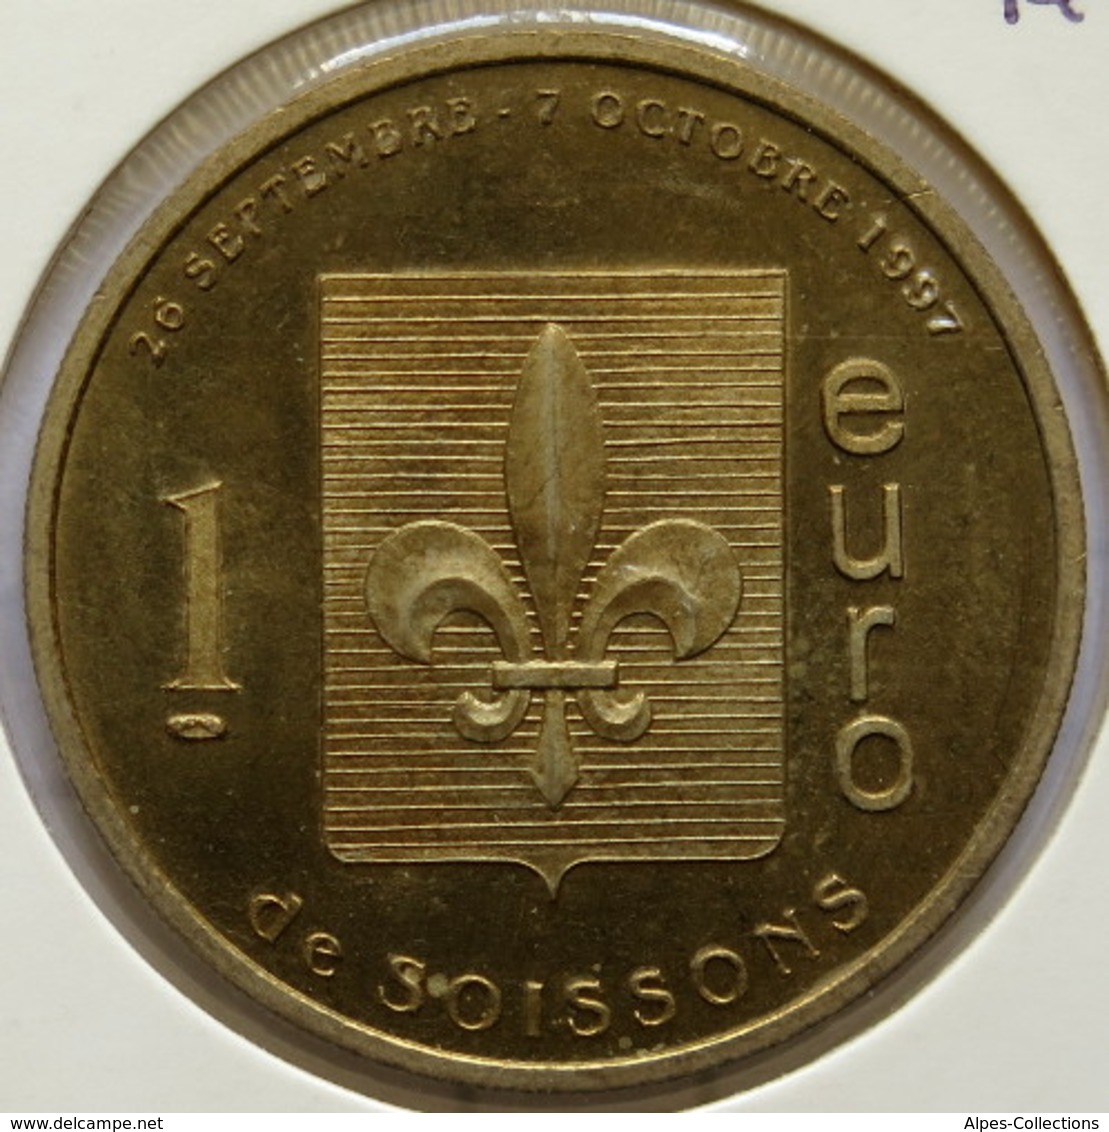 SOISSONS - EU0010.1 - 1 EURO DES VILLES - Réf: T391 - 1997 - Euros De Las Ciudades